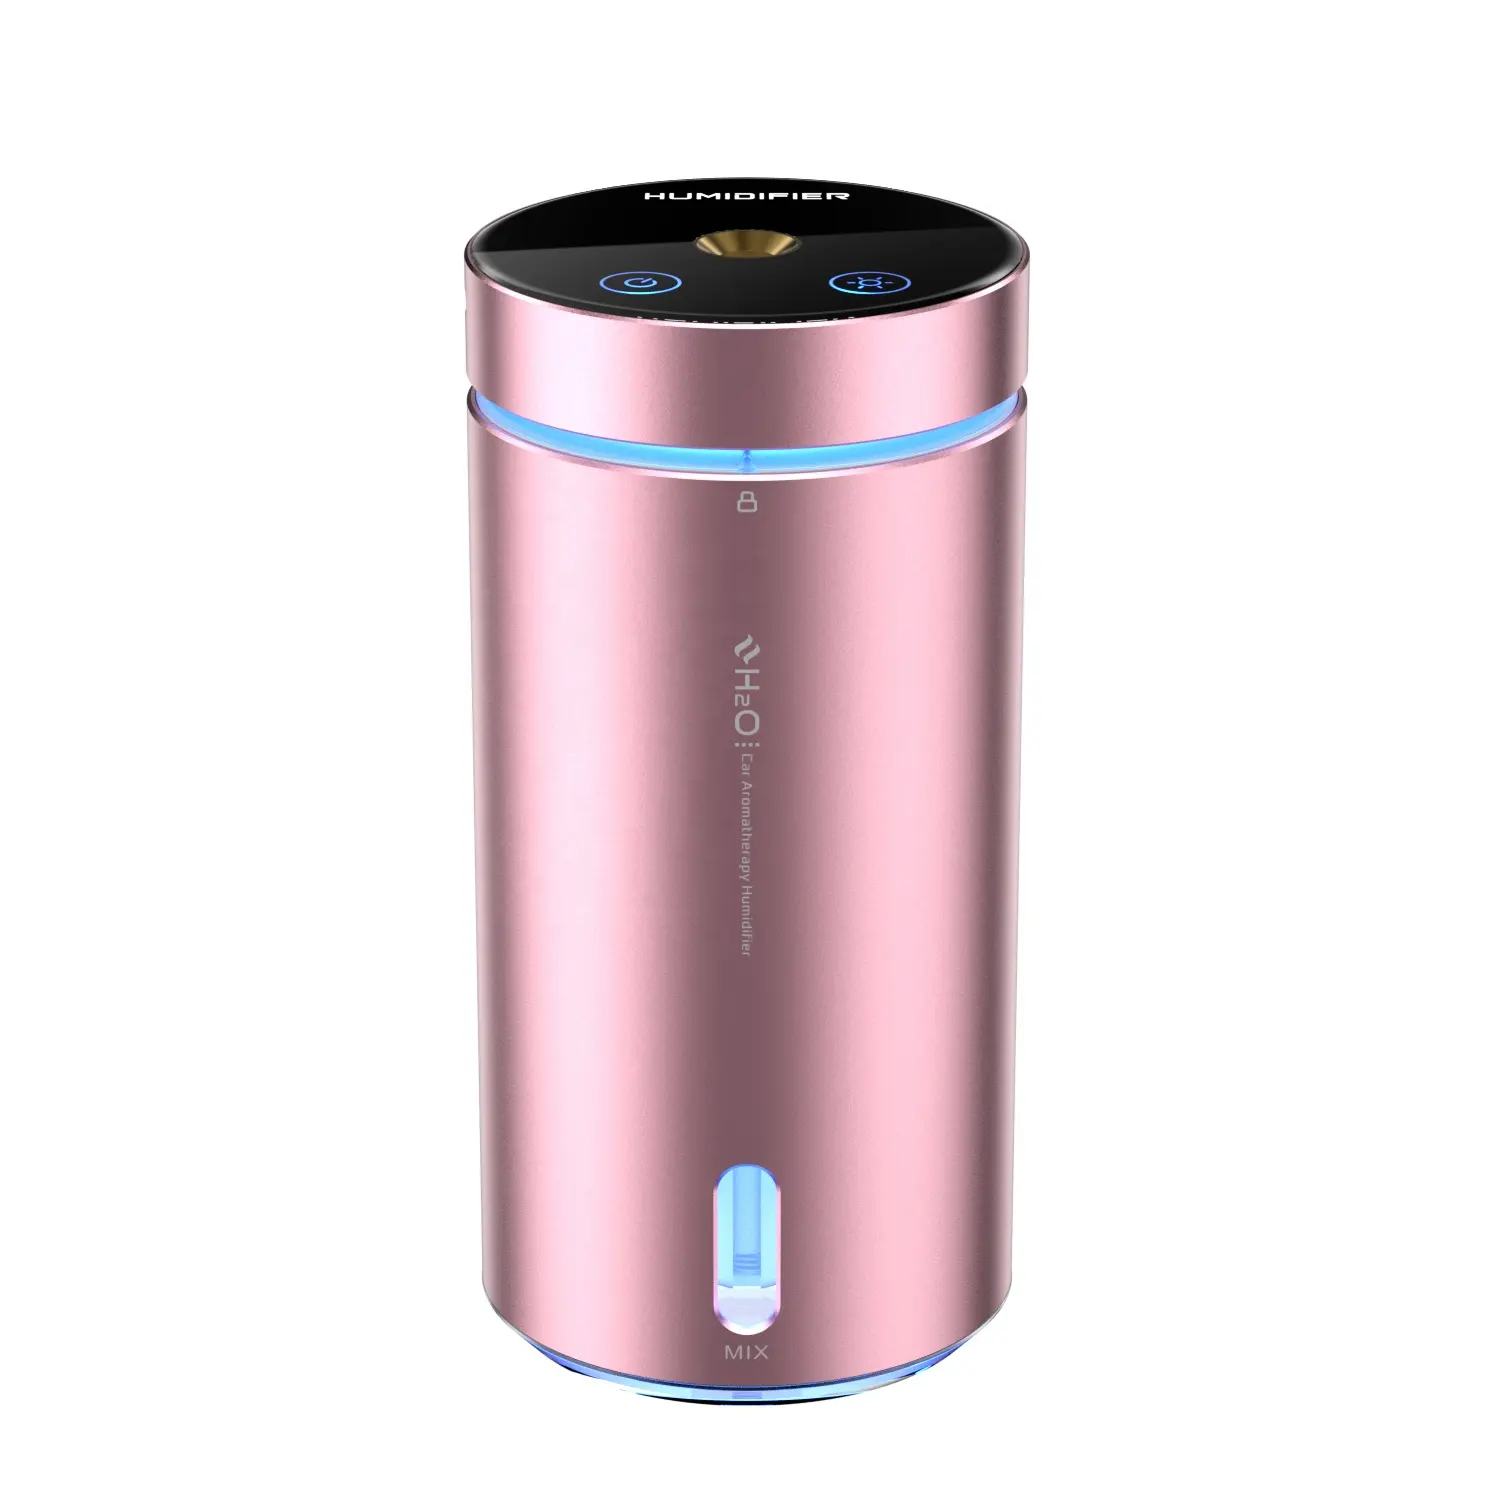 Portable Aluminum Usb Mini Smart 300ml Car Aroma Diffuser Humidifier Air Humidifier Aroma Diffuser With Night Light